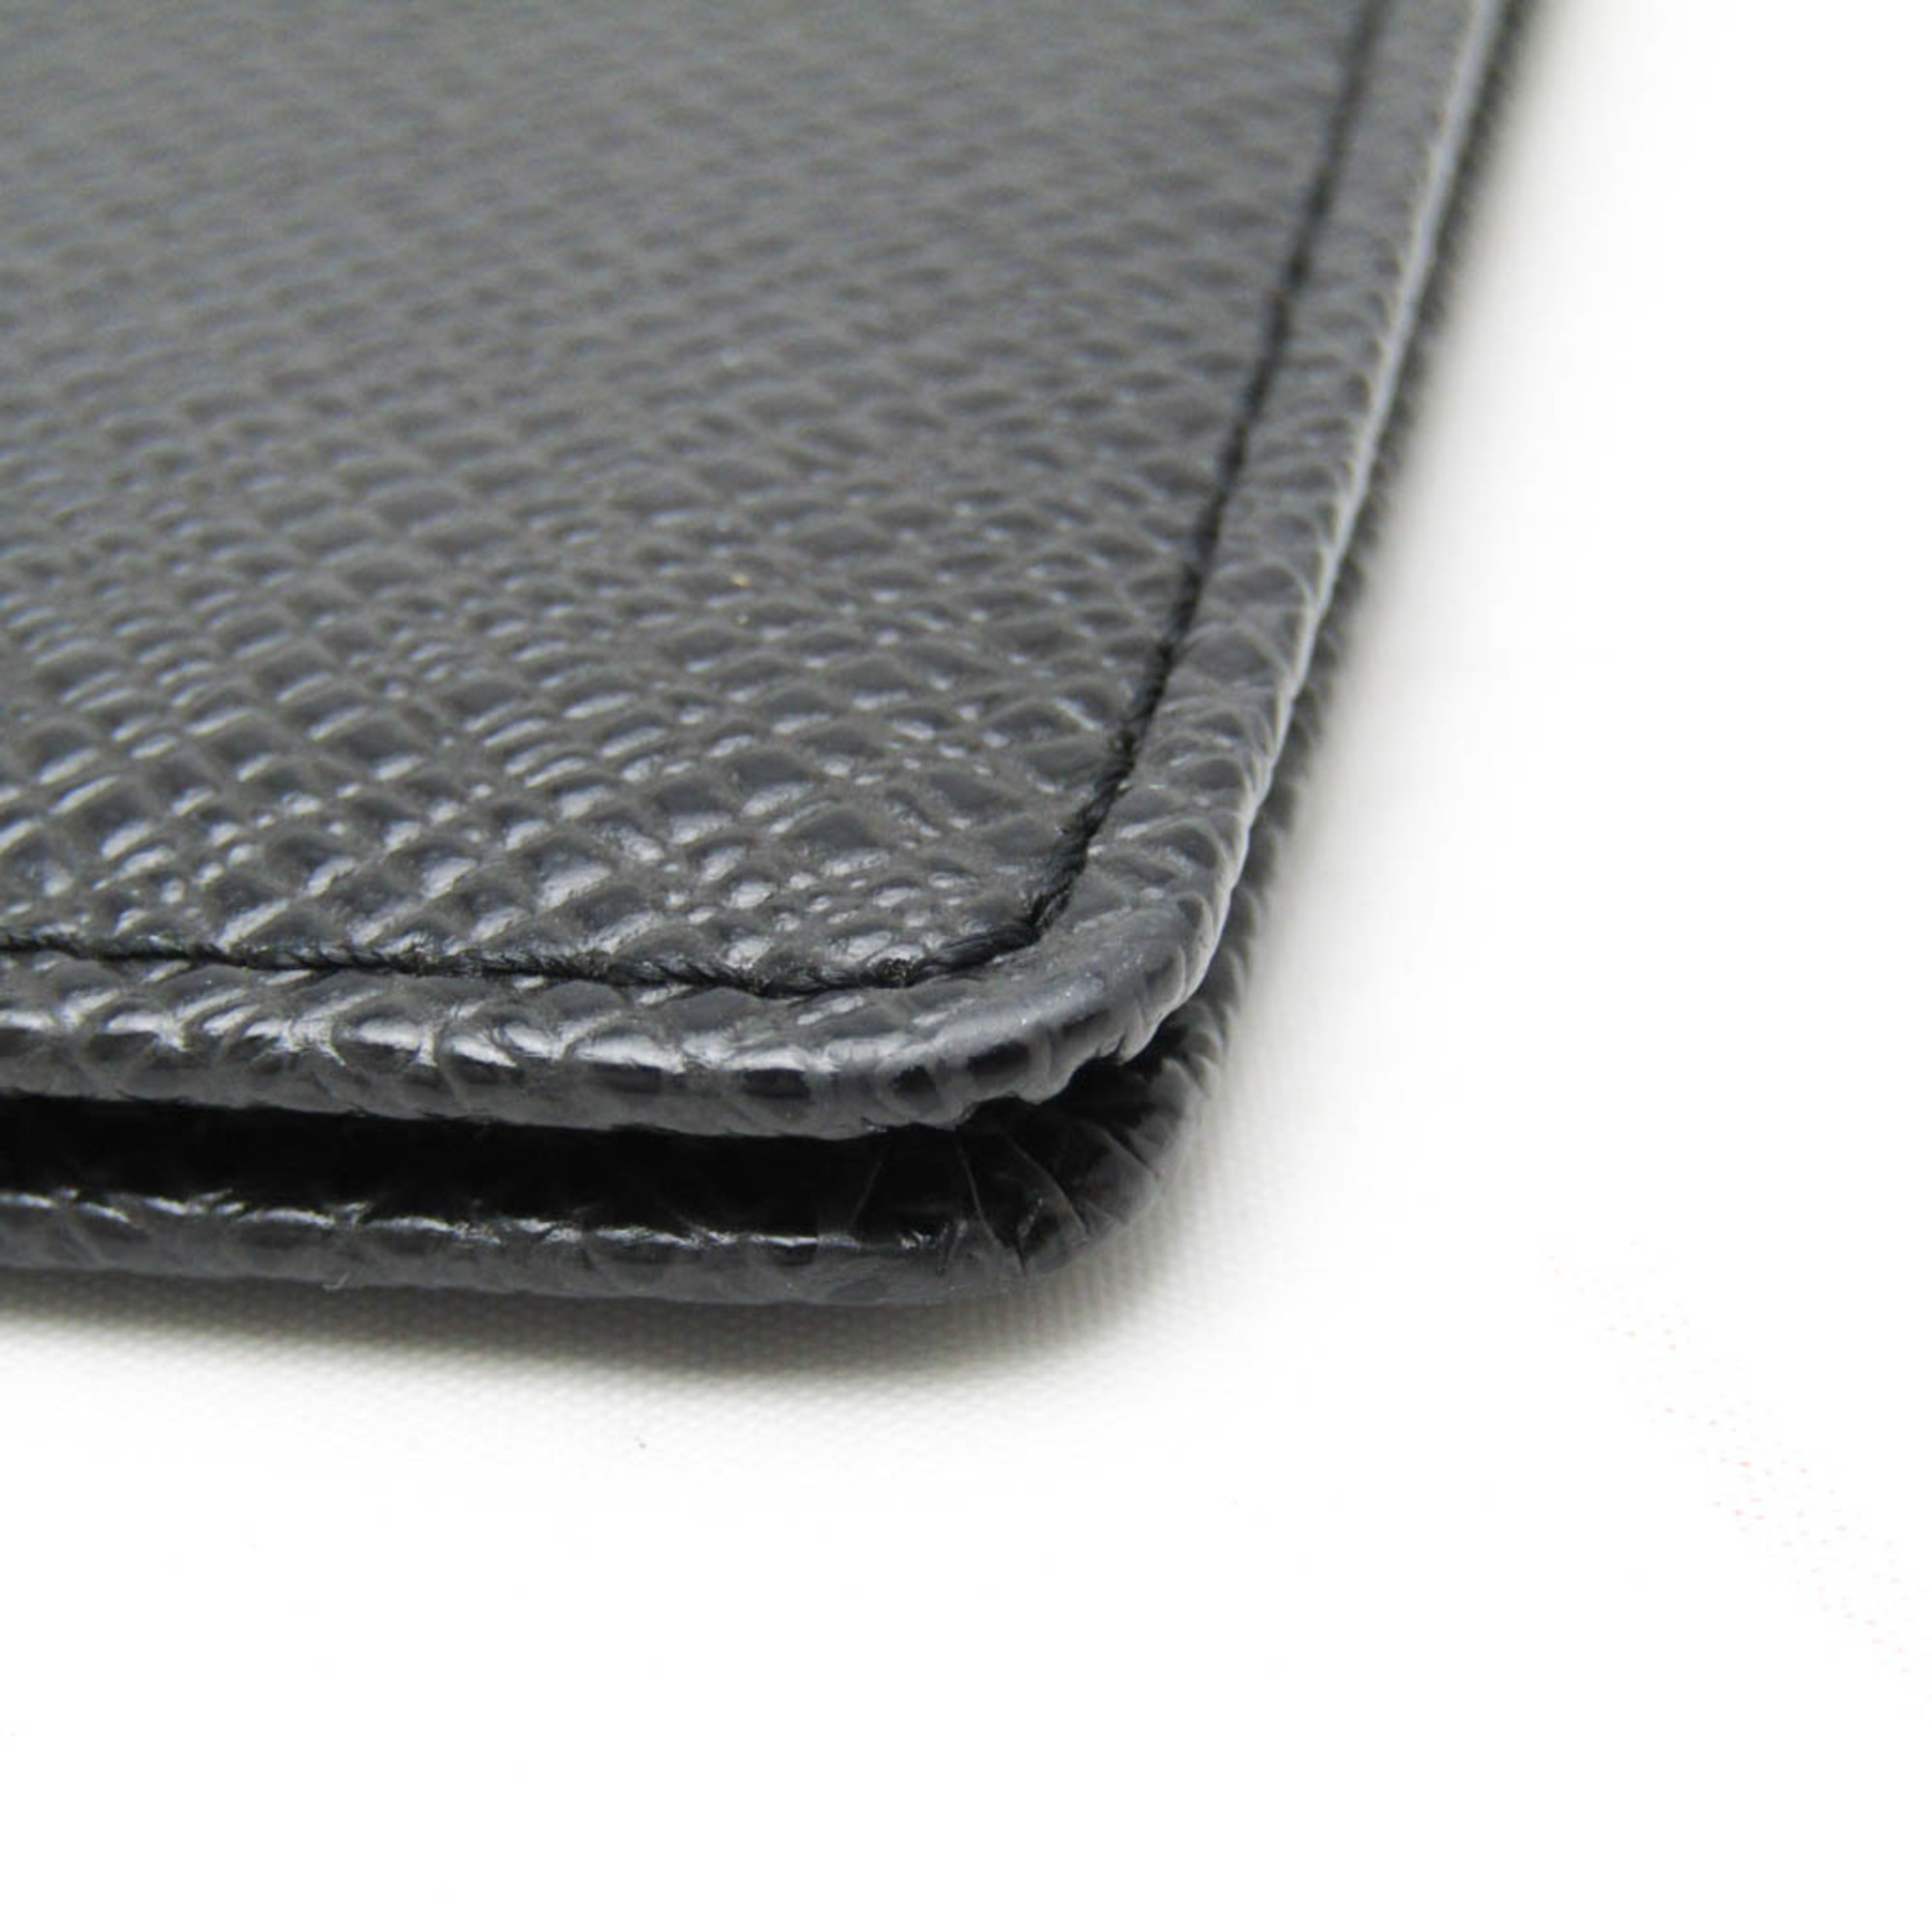 Louis Vuitton Taiga Pocket Size Planner Cover Ardoise Pocket Diary R20425